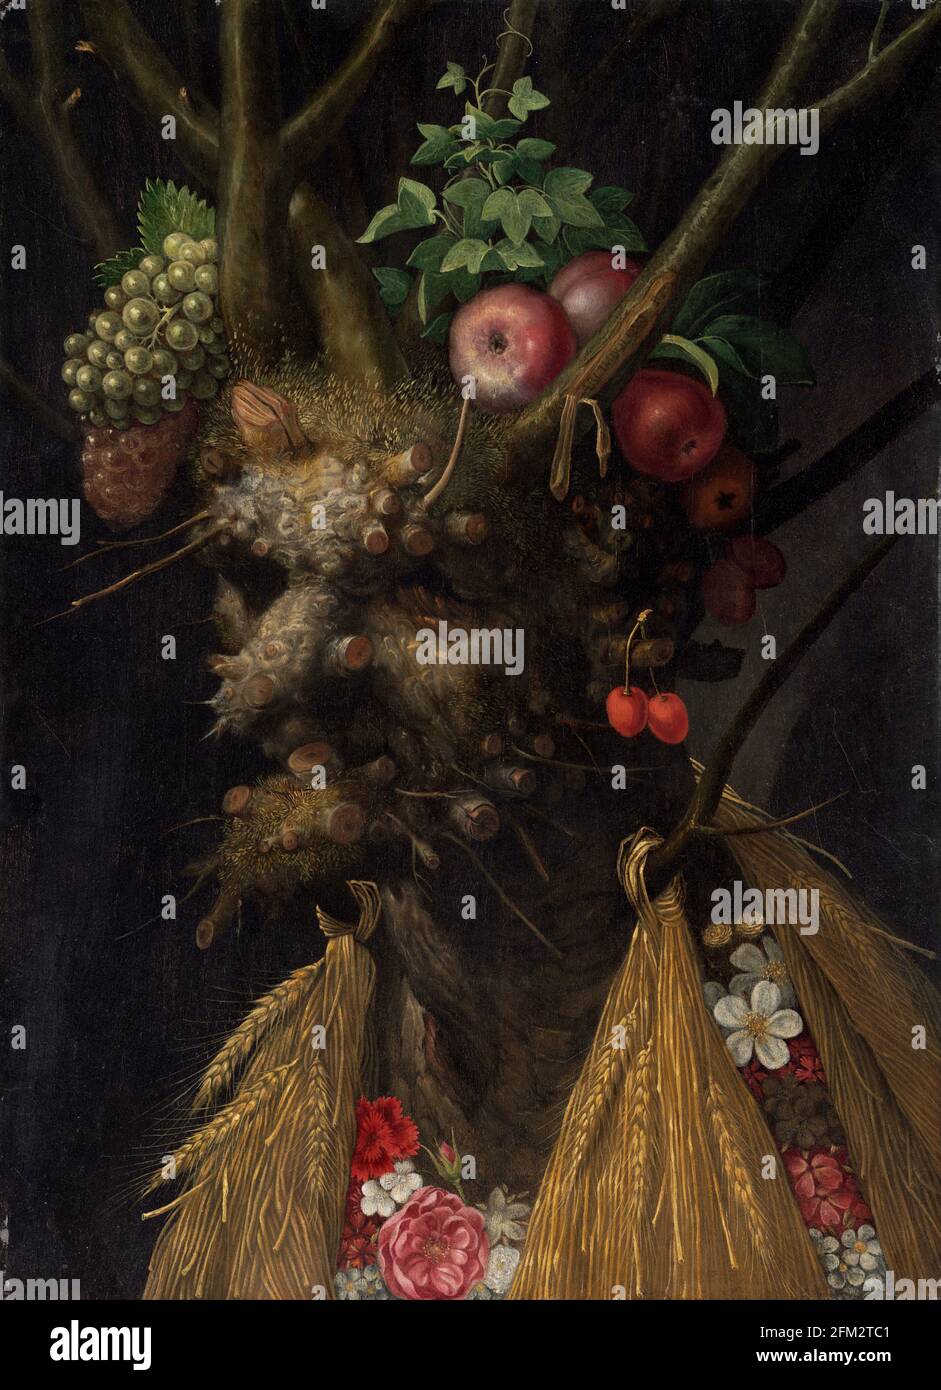 Title: Four Seasons in One Head Creator:  Giuseppe Arcimboldo Date: c. 1590 Medium: oil on panel Dimensions: 60.4 x 44.7 cm  Location: National Gallery of Art, Washington Stock Photo